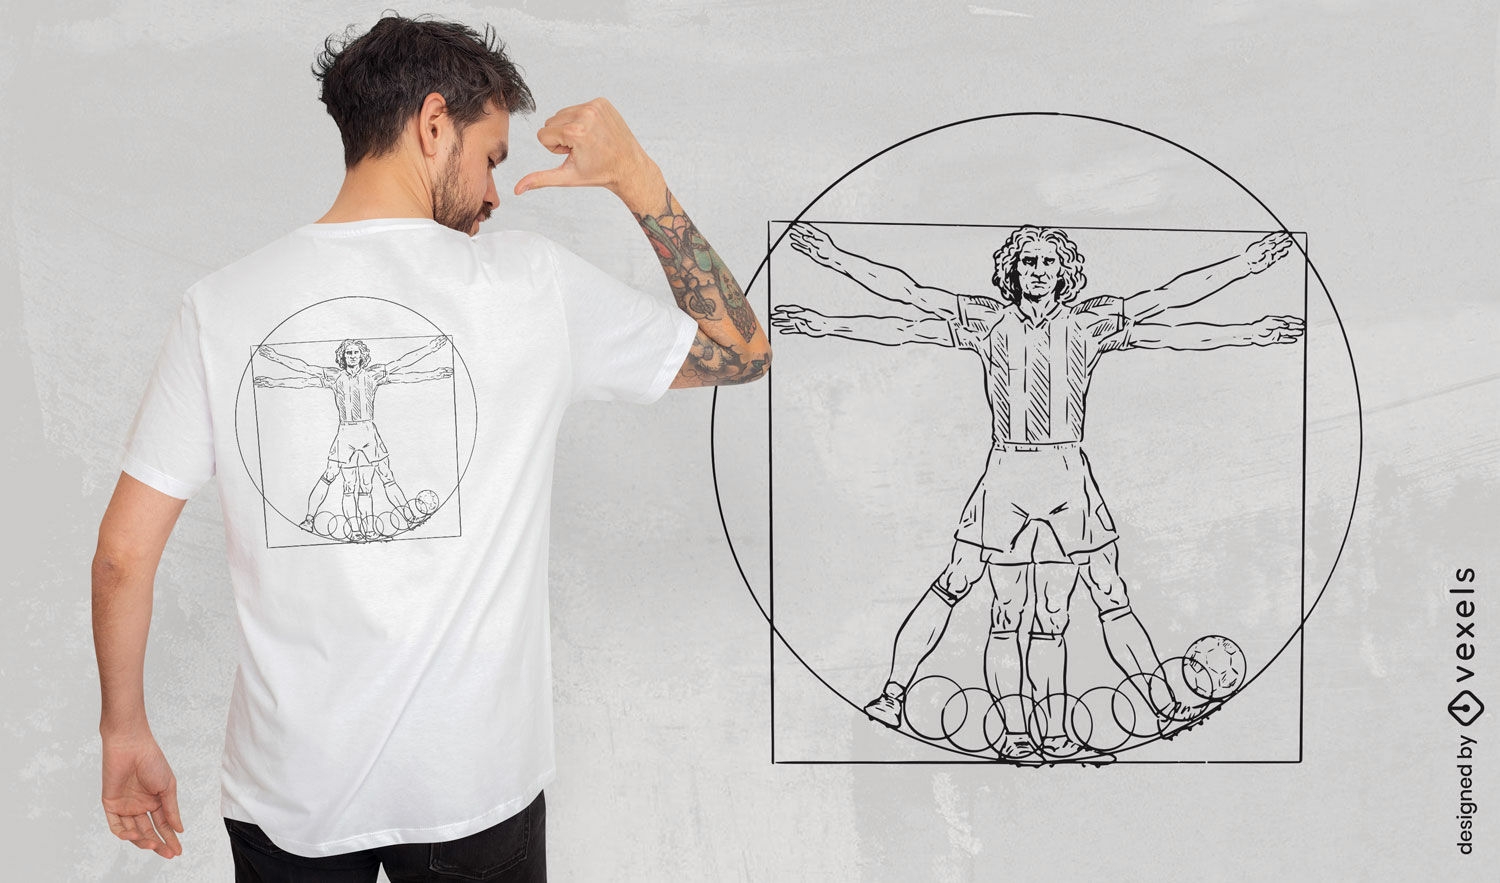 Artistic Vitruvian man t-shirt design